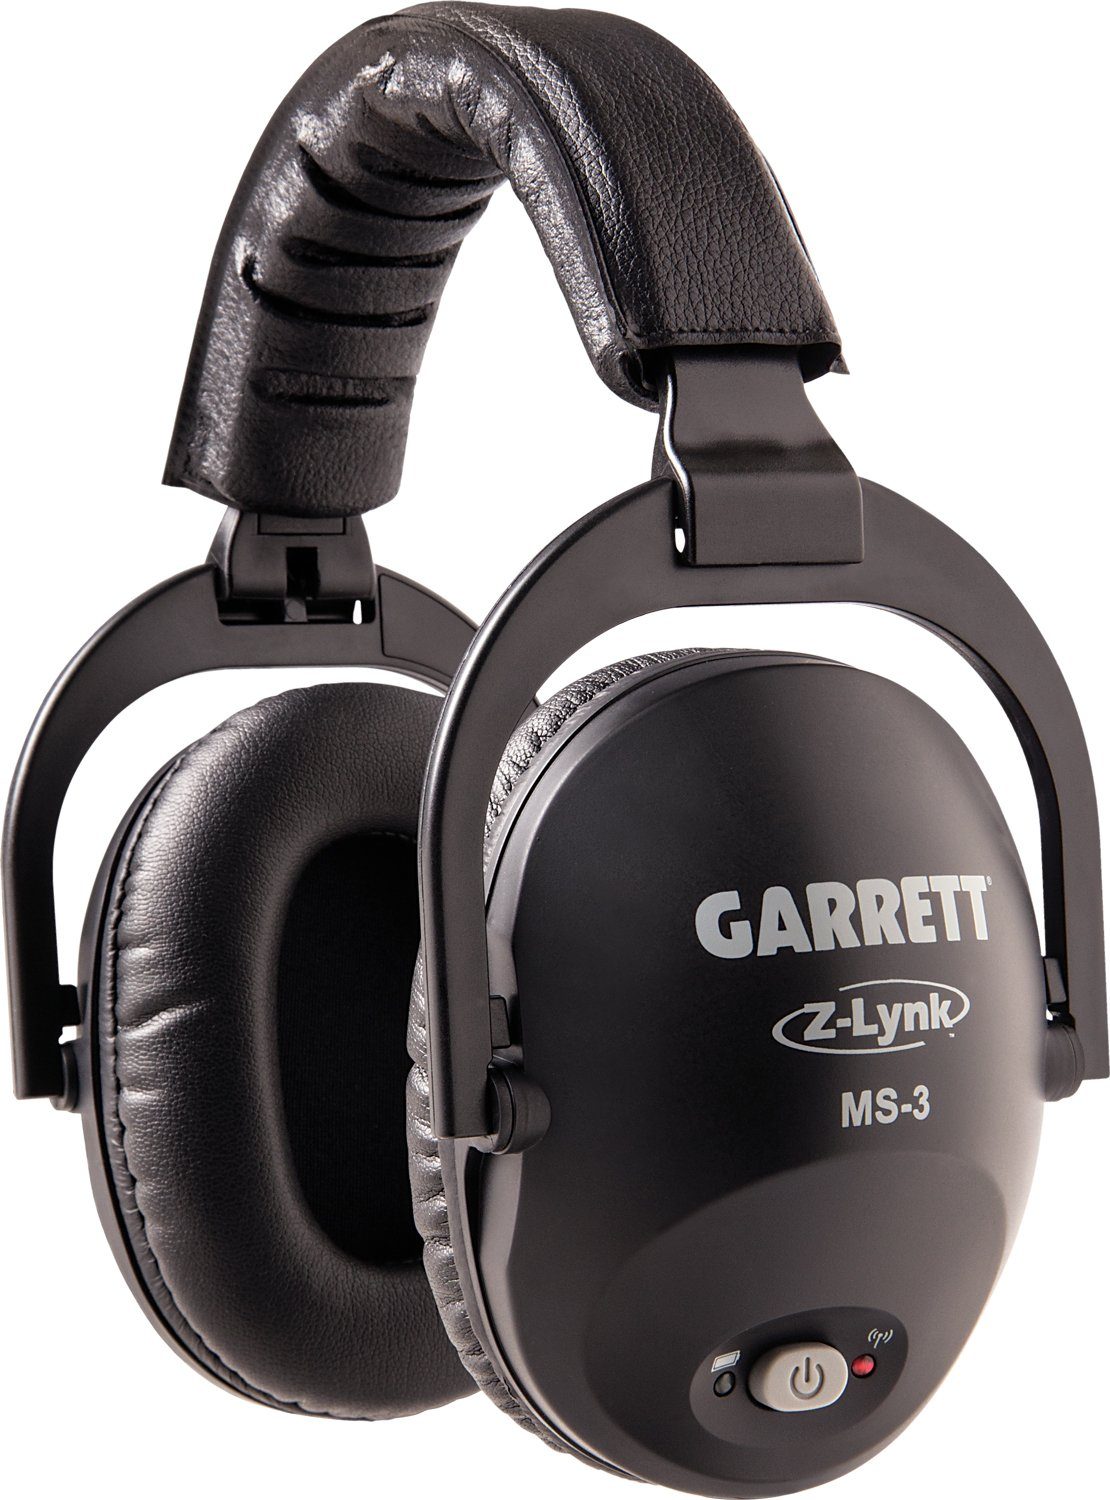 Garrett MS-3 WIRELESS HEADPHONES FOR Z-LYNK N/A/Y Accessories Garrett 